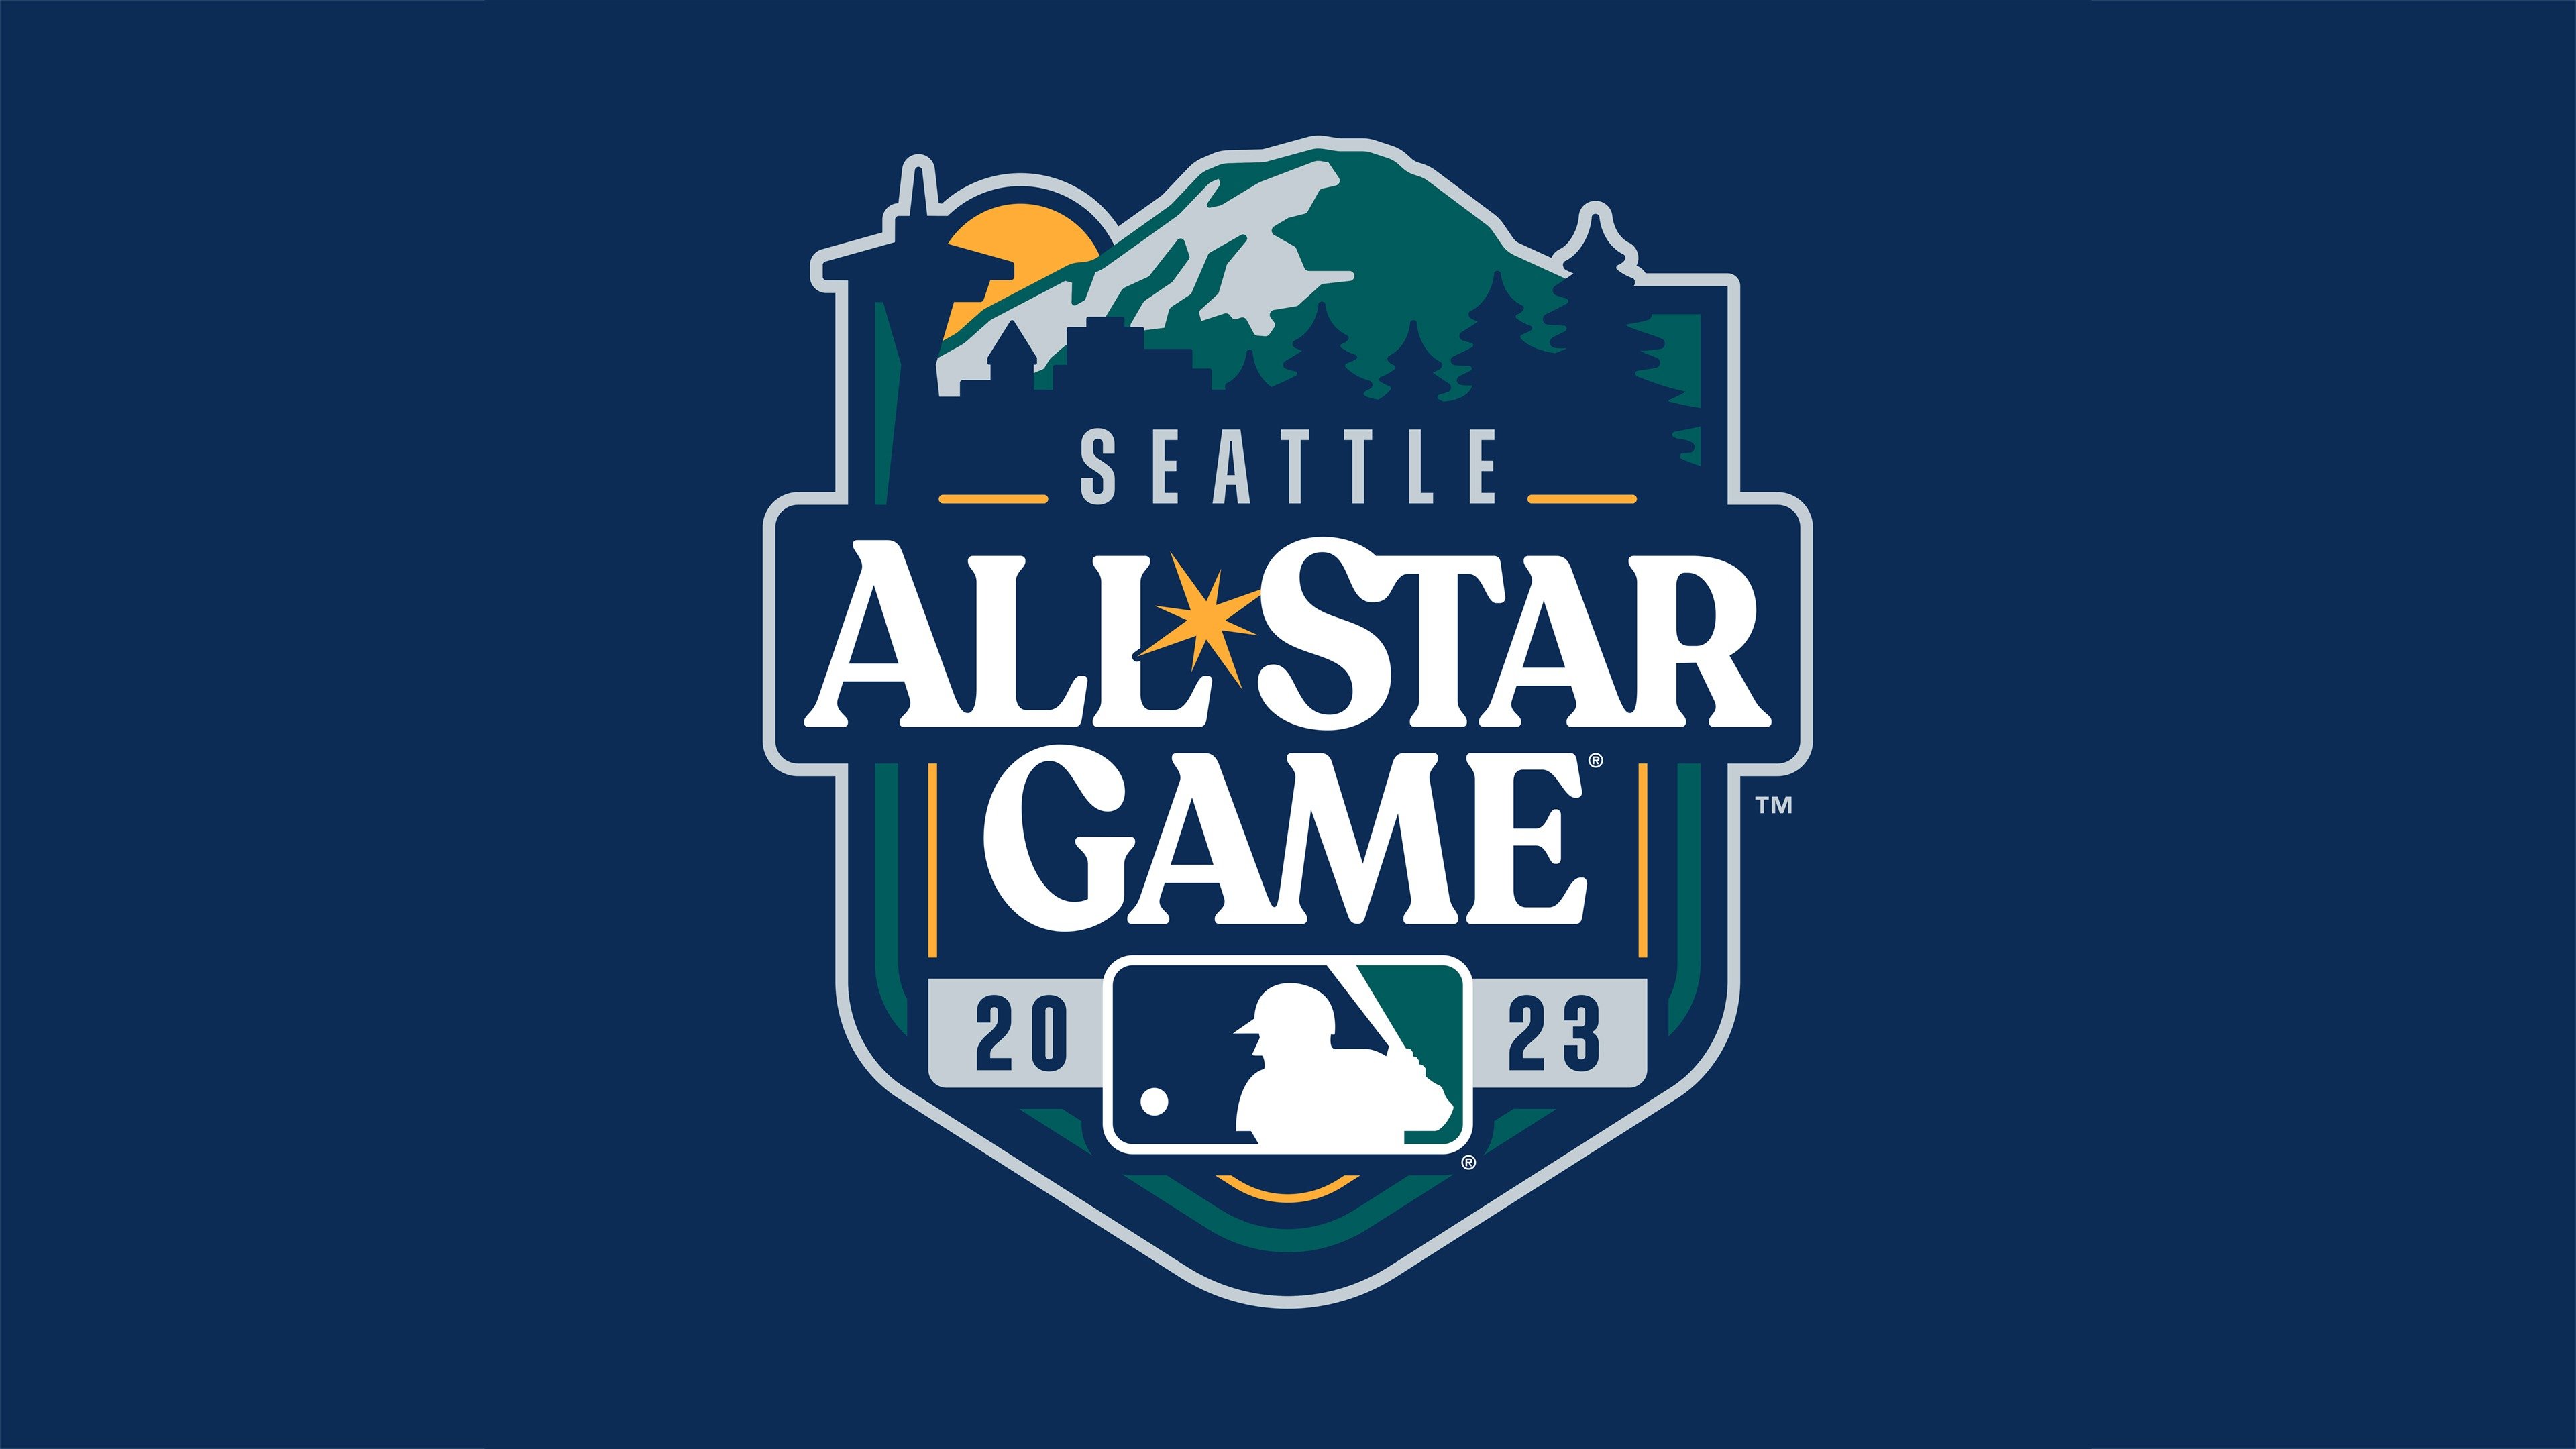 2021 MLB AllStar Game Uniforms Unveiled Worn InGame for First Time   SportsLogosNet News